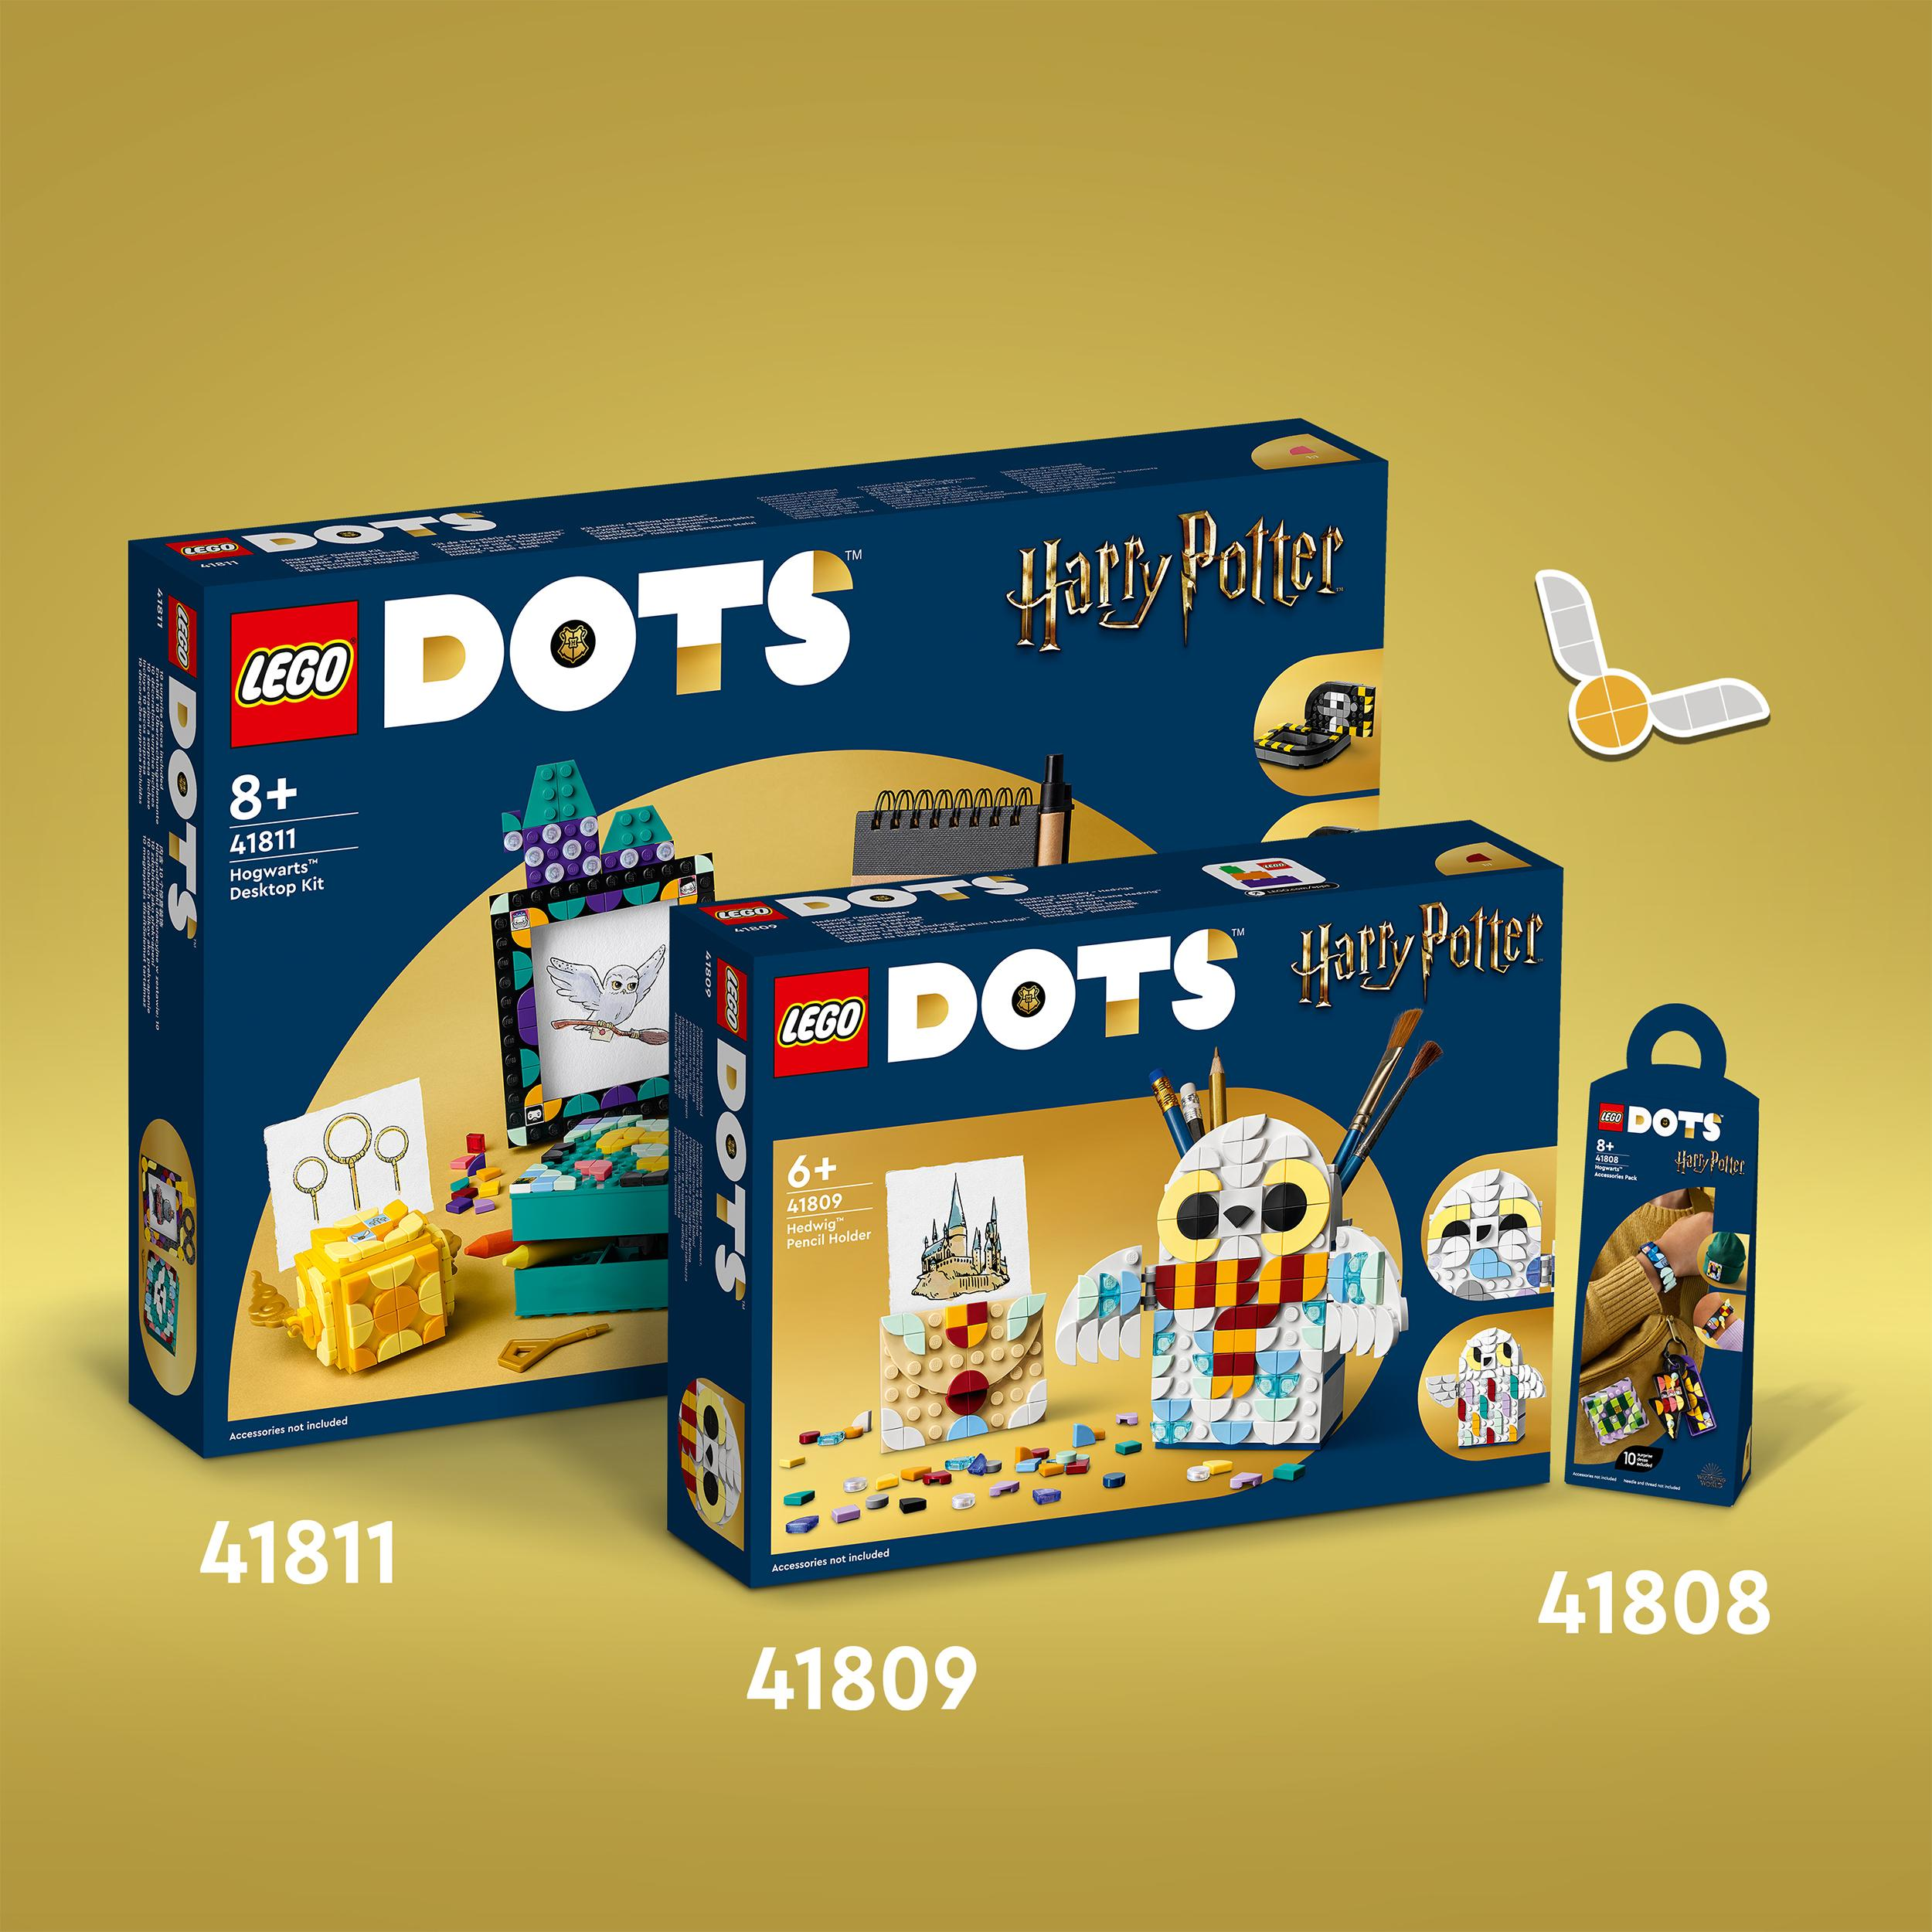 DOTS Schreibtisch-Set Hogwarts LEGO Mehrfarbig Bausatz, Potter 41811 Harry